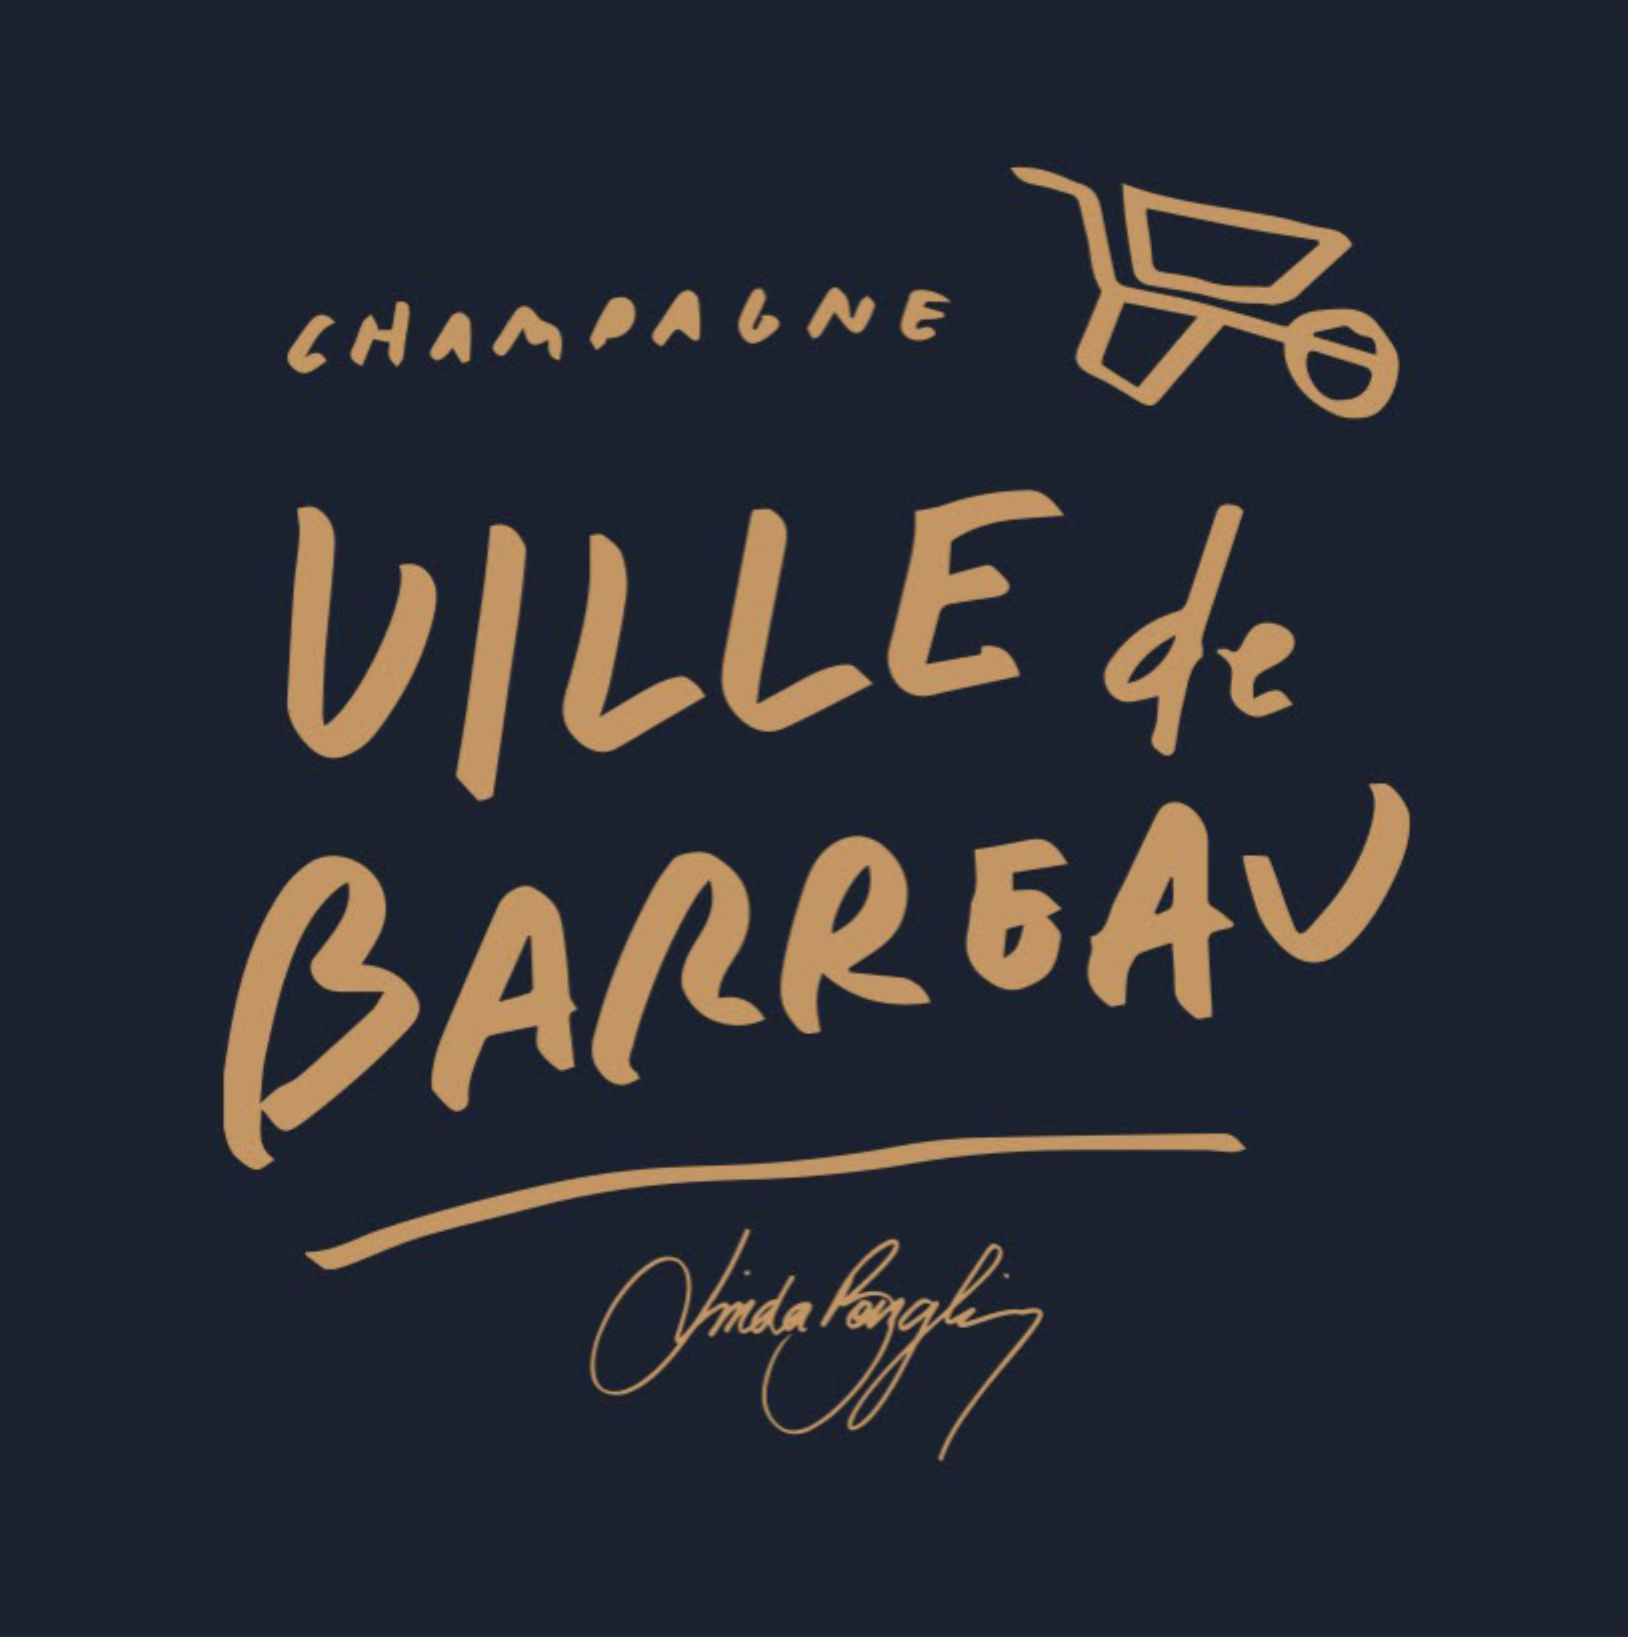 Etikett - Champagne Ville de Barreau